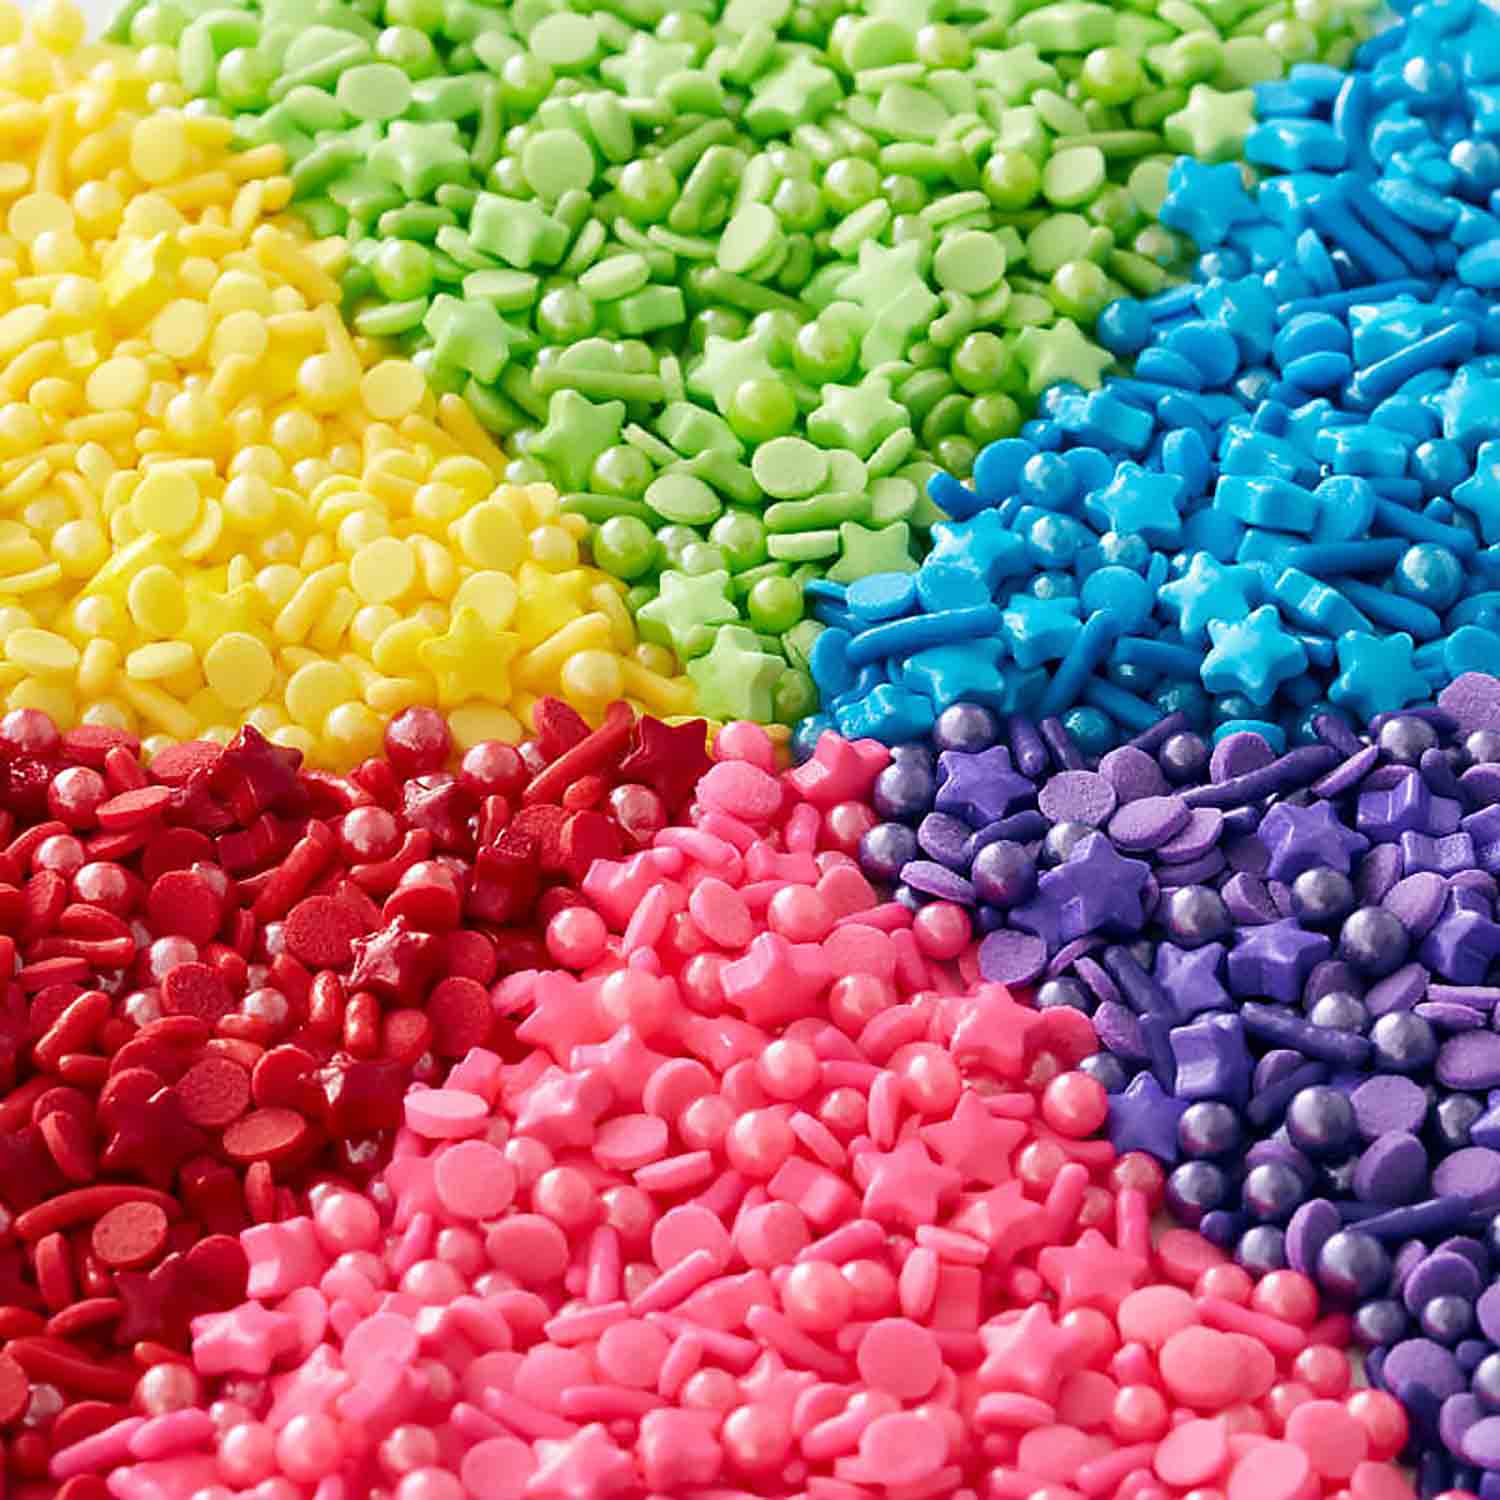 Sprinkles Rainbow Mix 285 g - Decopan, C.A.